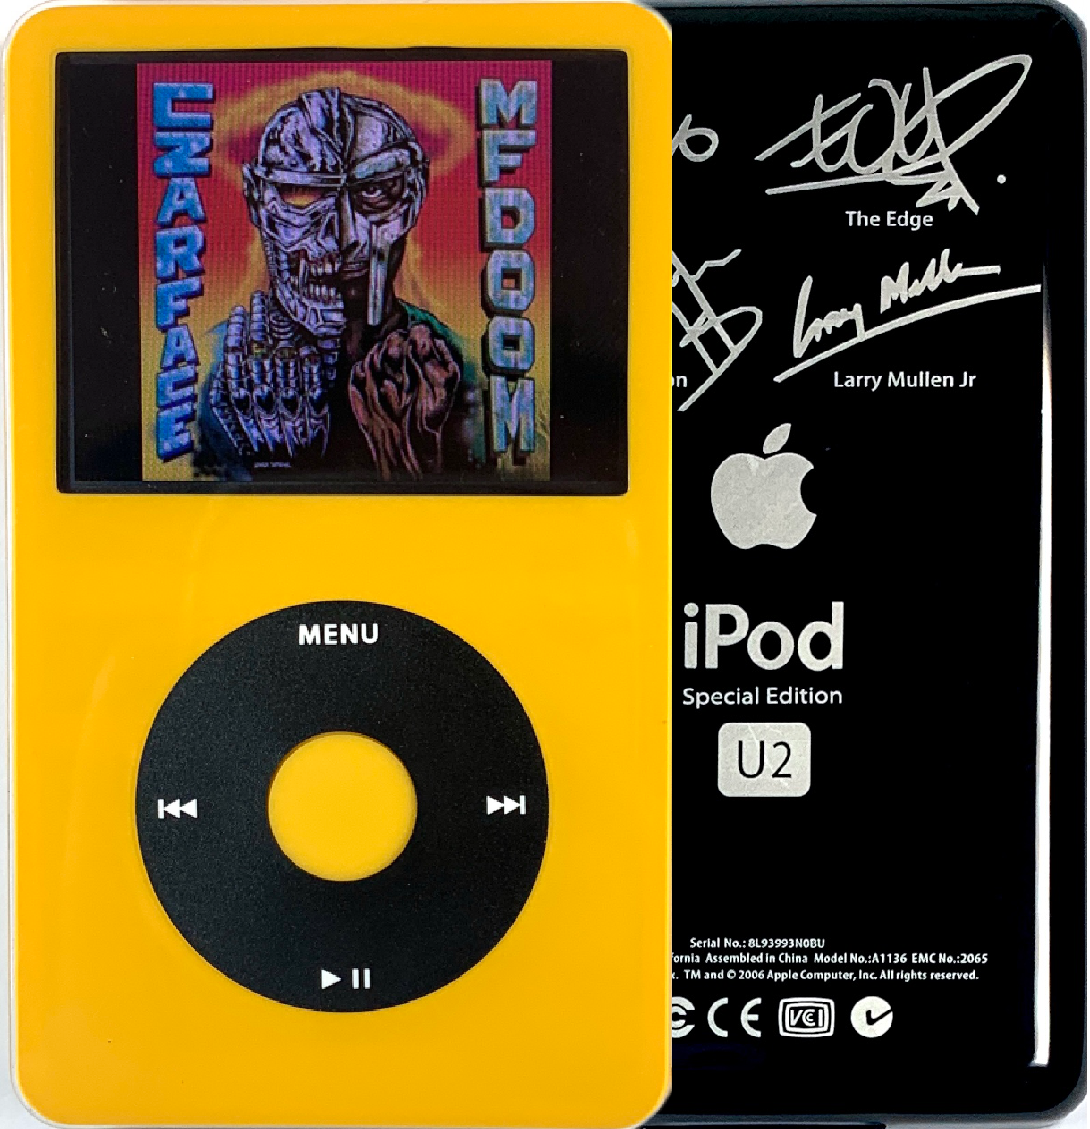 New Apple iPod Video Classic 5th & 5.5 Enhanced Yellow / Black / Yellow (U2 Special Edition Black)